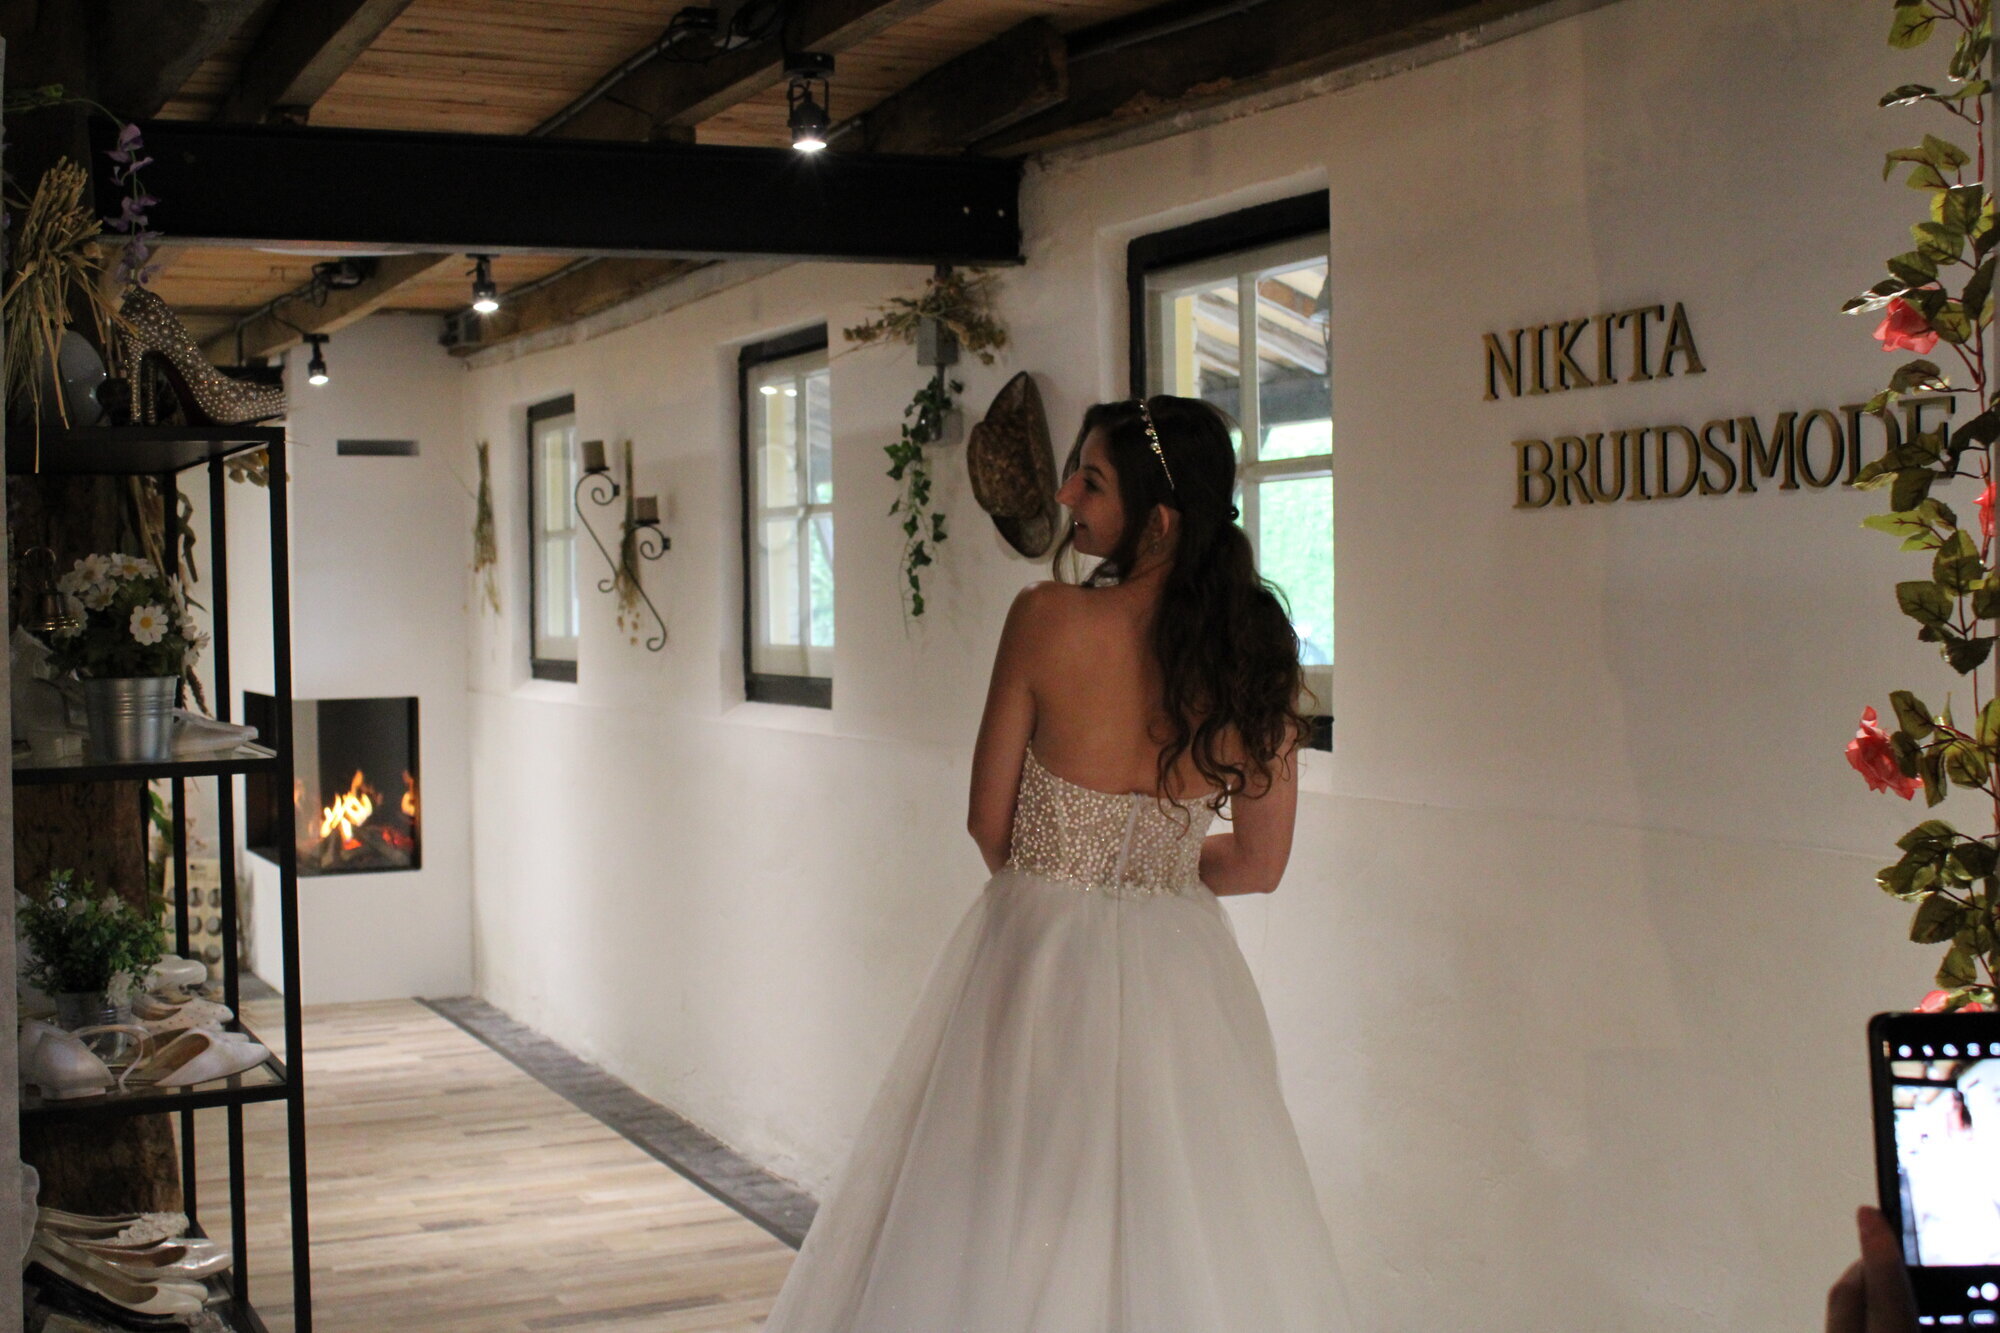 Foto's Nikita Bruidsmode & ver-KOOP je trouwjurk